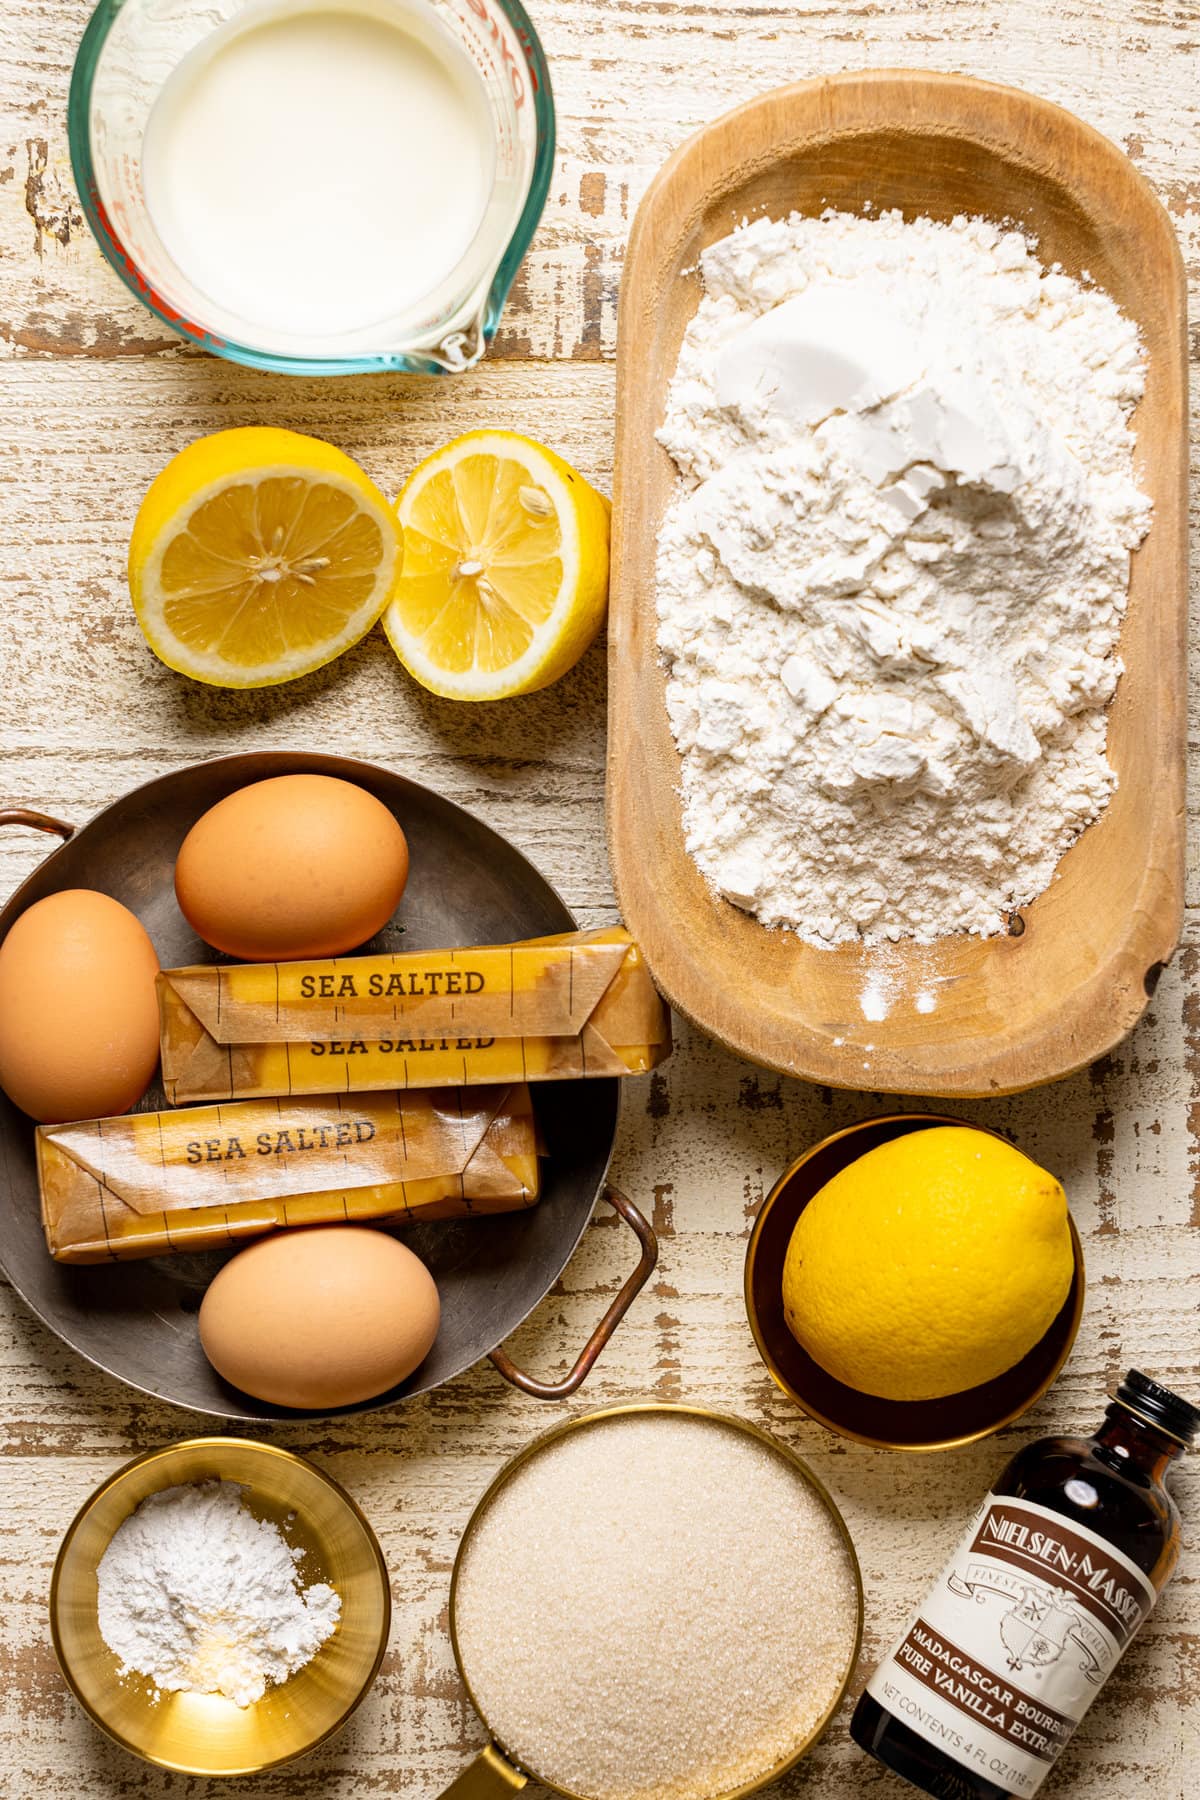 Ingredients for Iced Lemon Loaf Pound Cake including eggs, lemons, vanilla, and butter